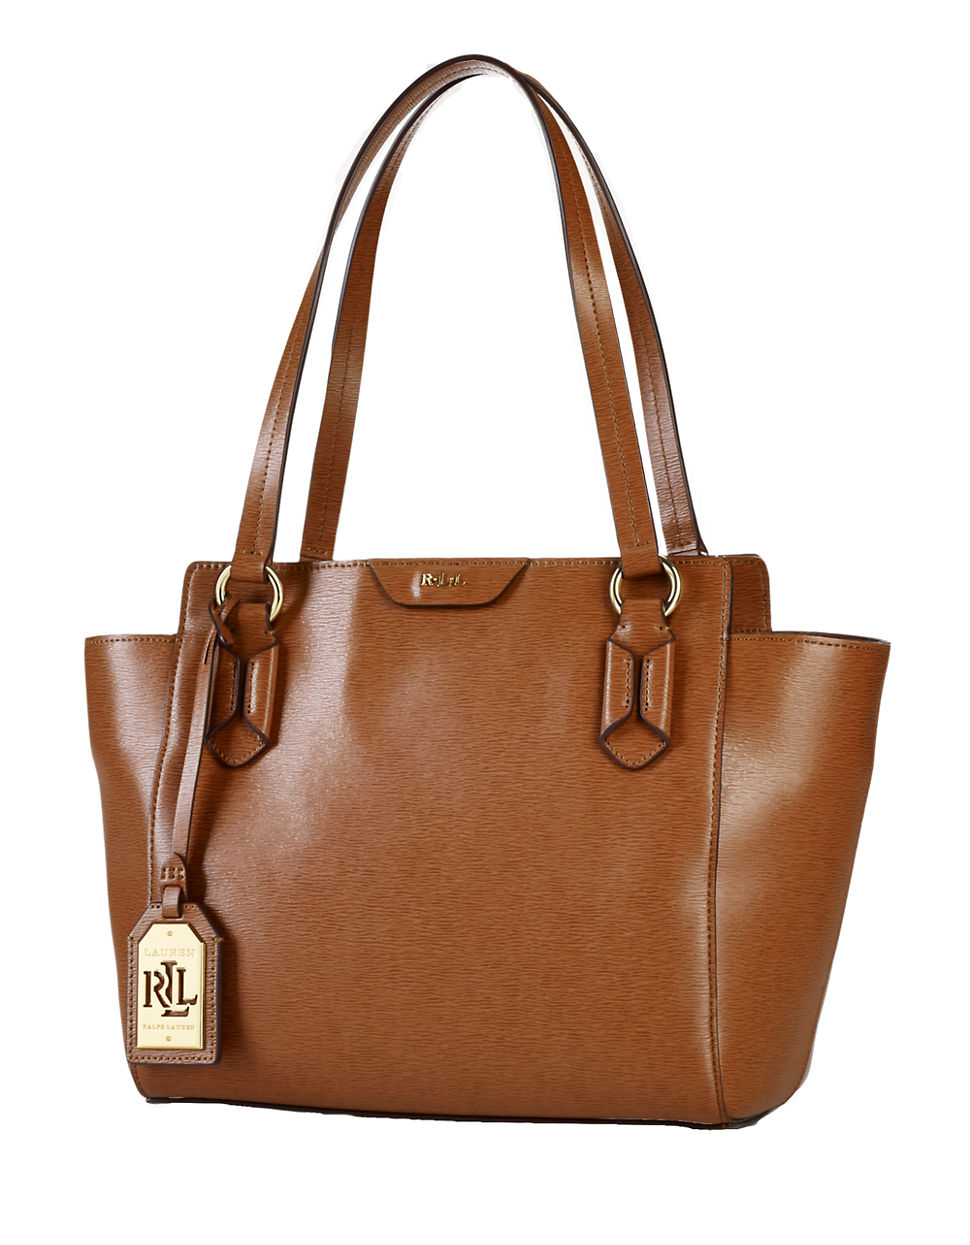 Lauren By Ralph Lauren Tate Leather Modern Shopper Tote Bag in Brown